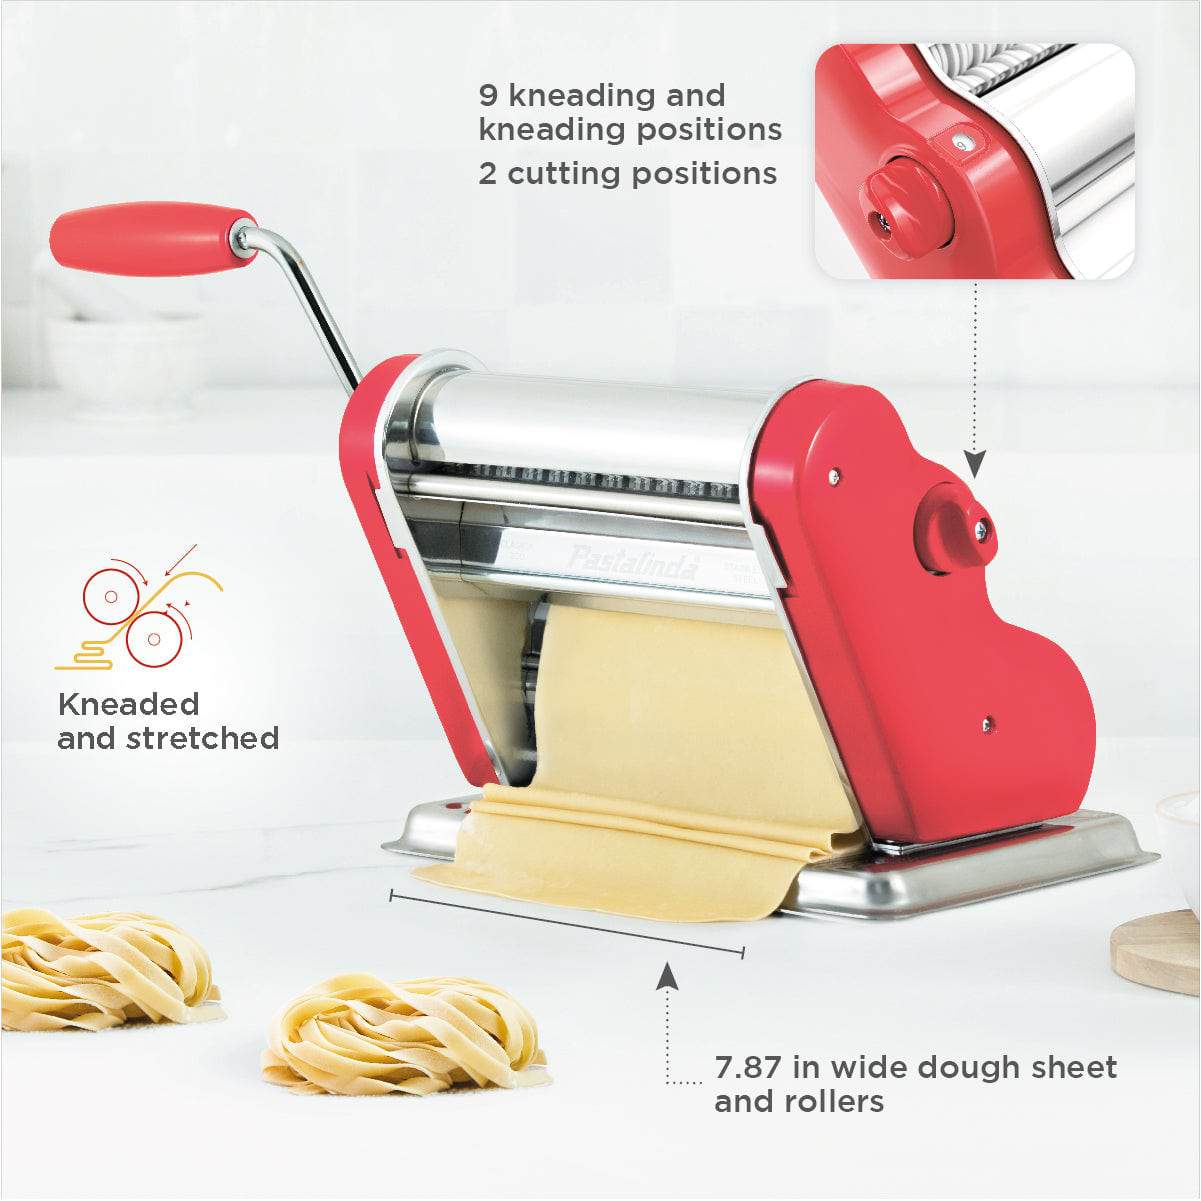 Pastalinda Classic 200 Coral Pasta Maker Machine With Hand Crank And Two Clamps - Pastalinda